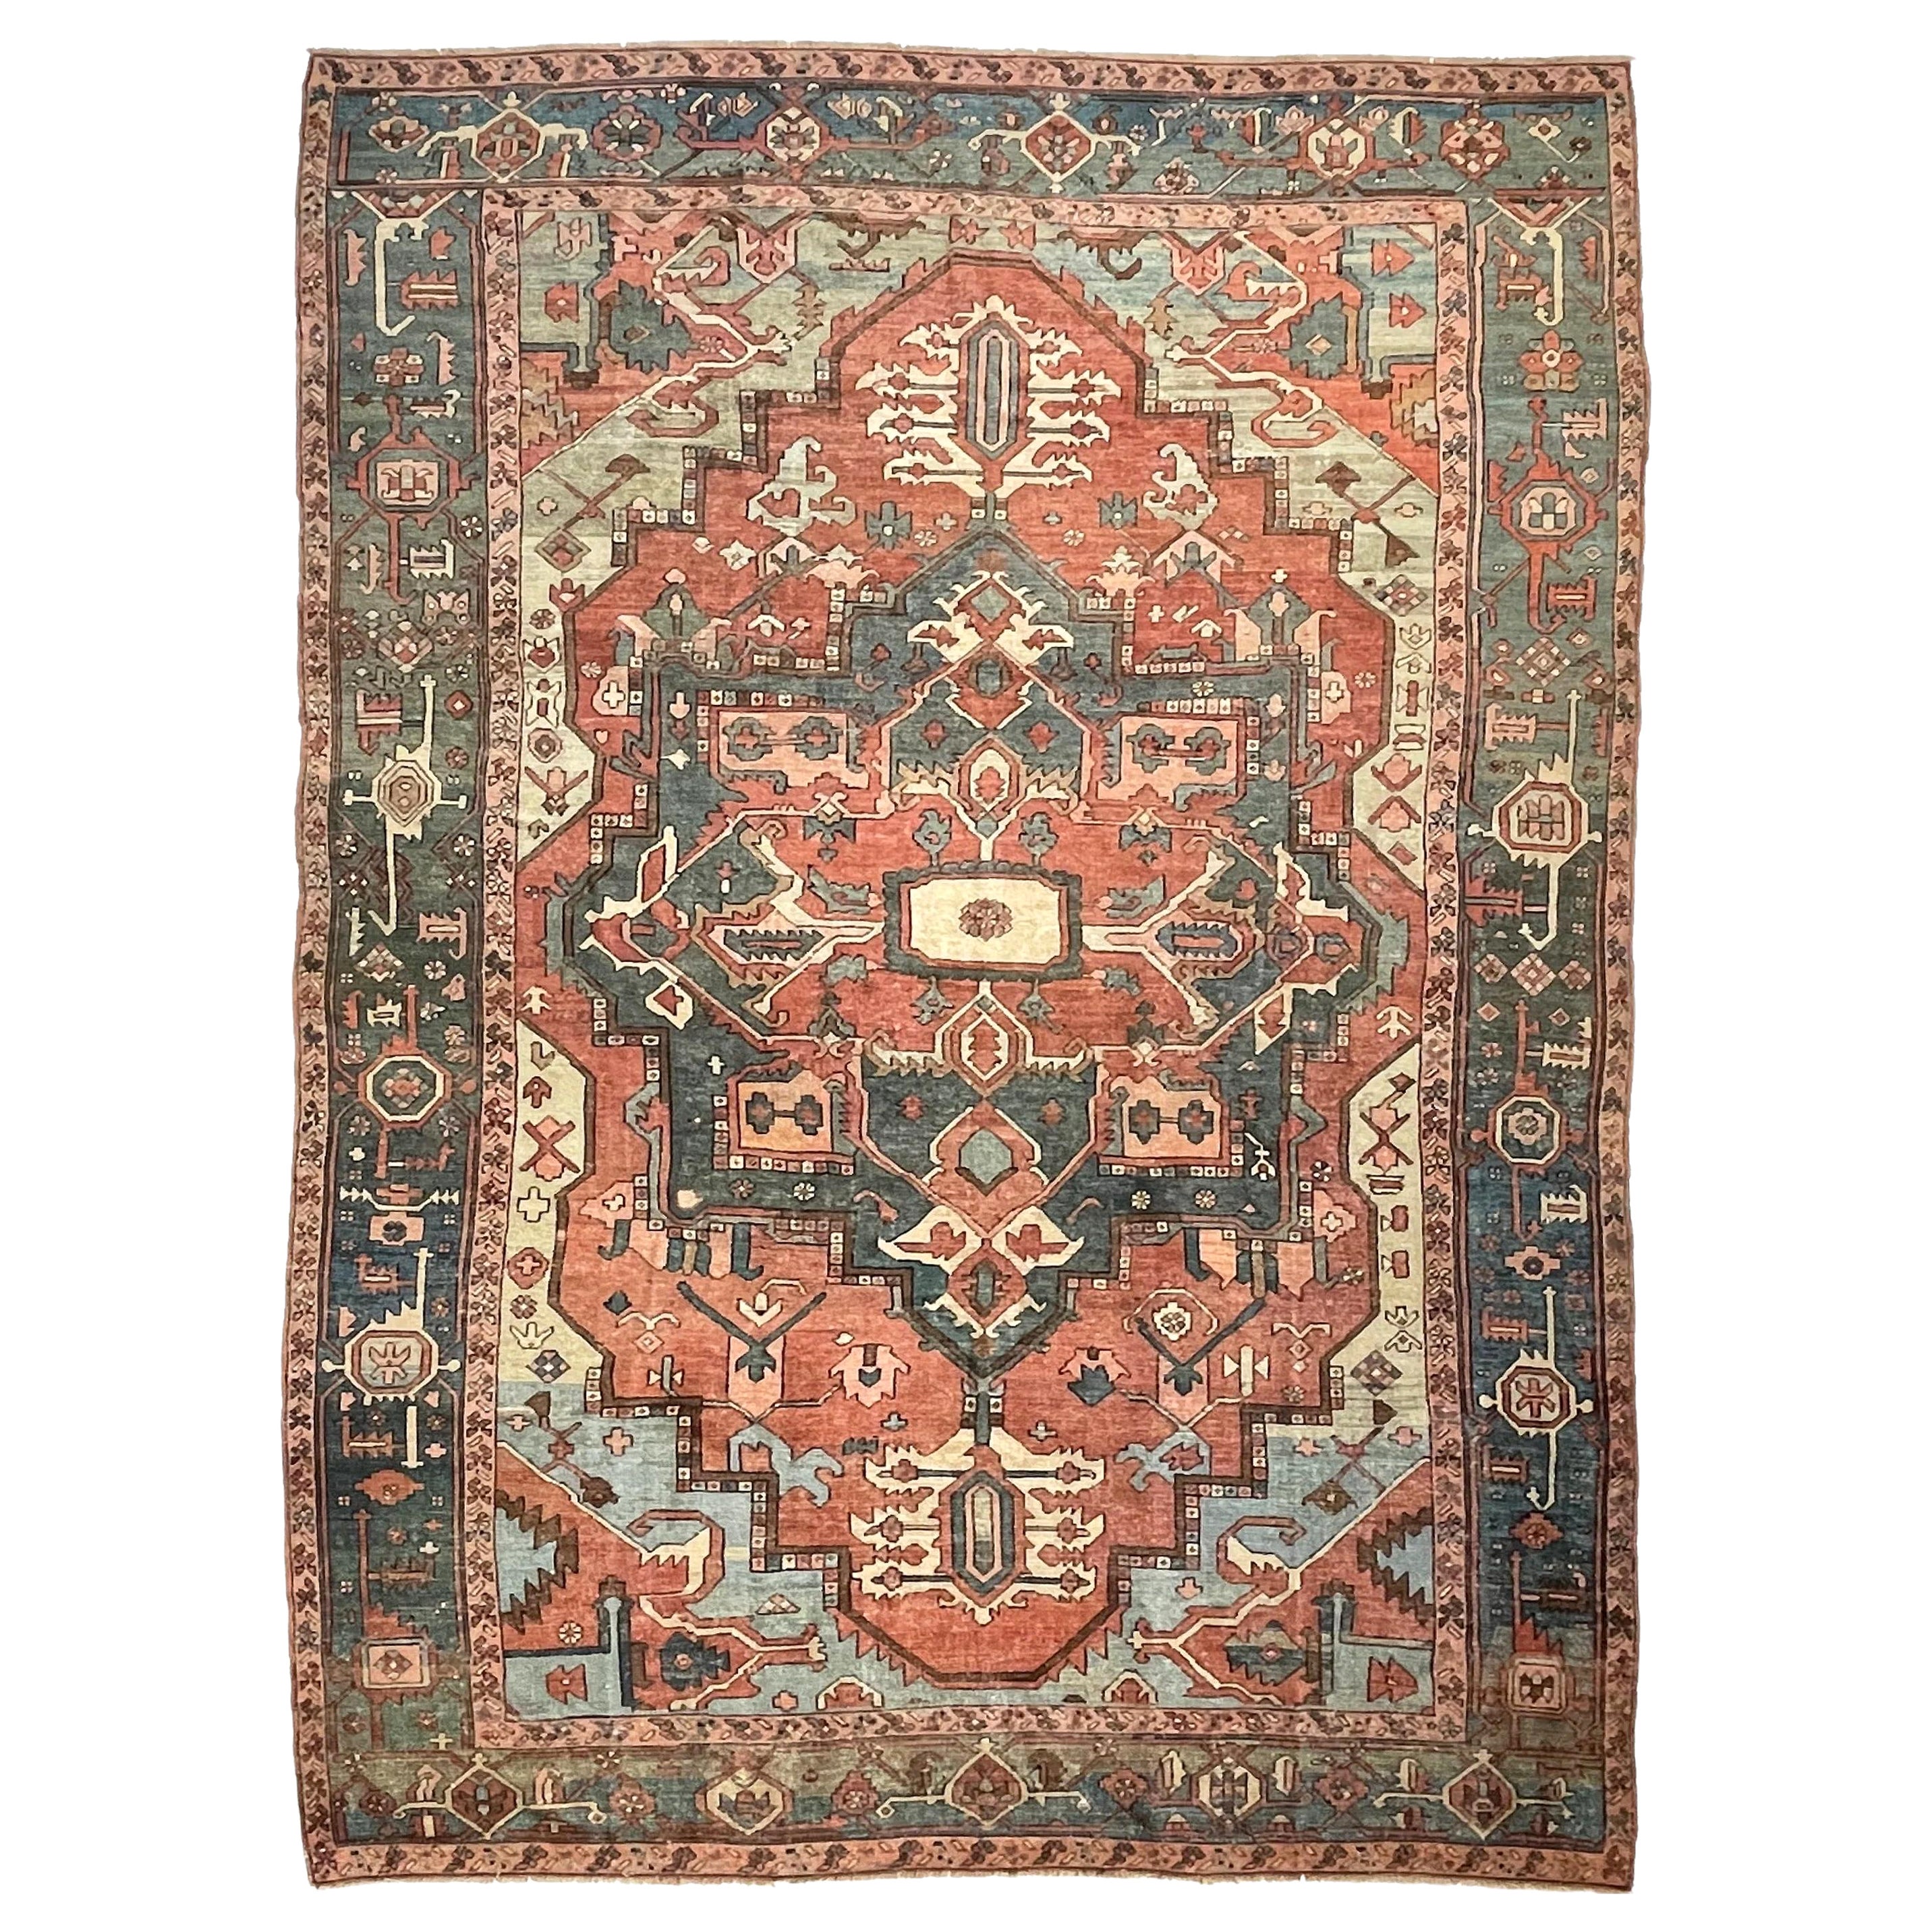 Antique Persian Green And Terracotta Serapi Carpet Rug, circa 1880-1900's For Sale